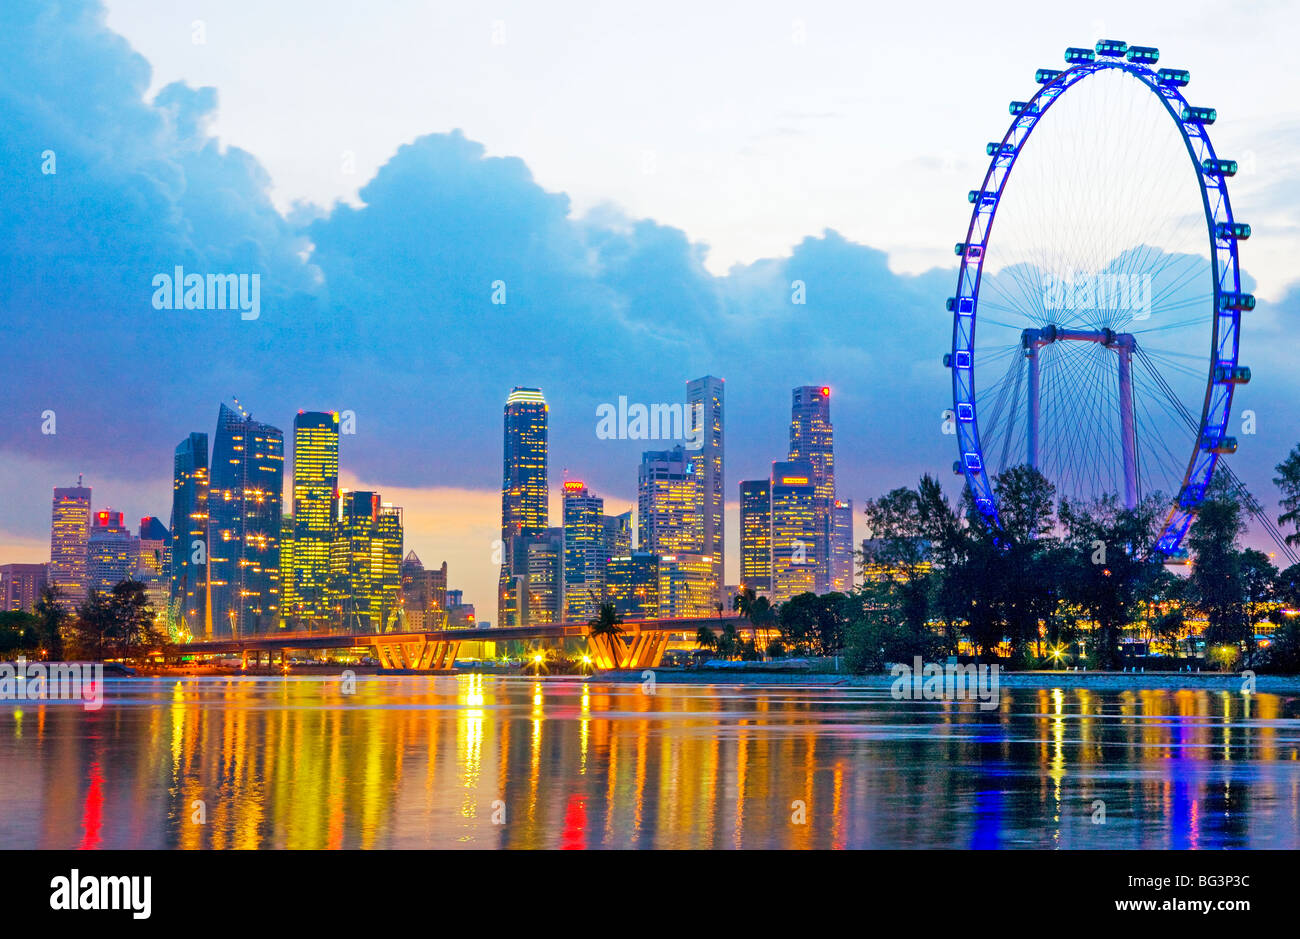 Singapore Flyer and skyline. Singapore, Singapore City, Marina Bay. Stock Photo